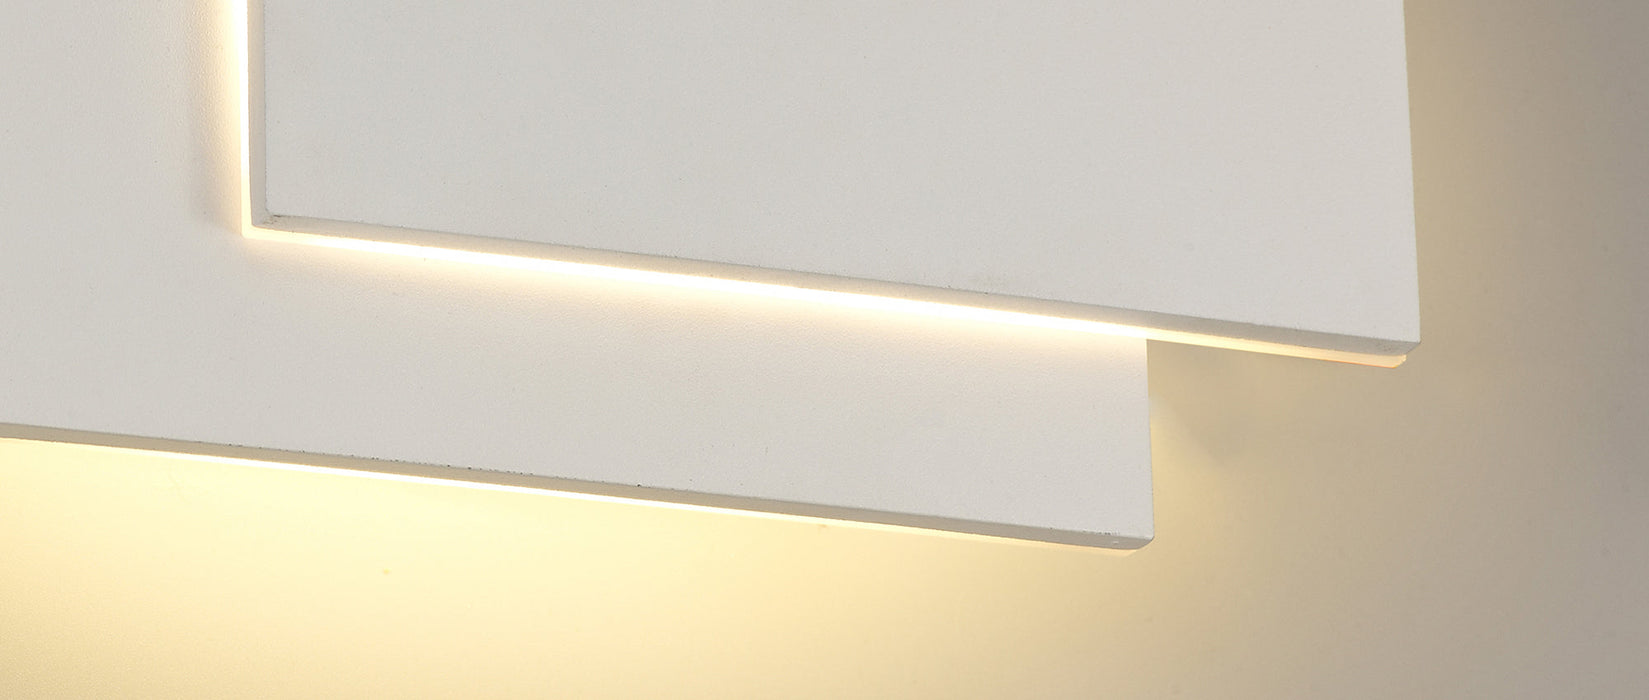 Deco Kiania Wall Light Rectangular, 12W LED 3000K, Sand White, 490lm, 3yrs Warranty • D0448